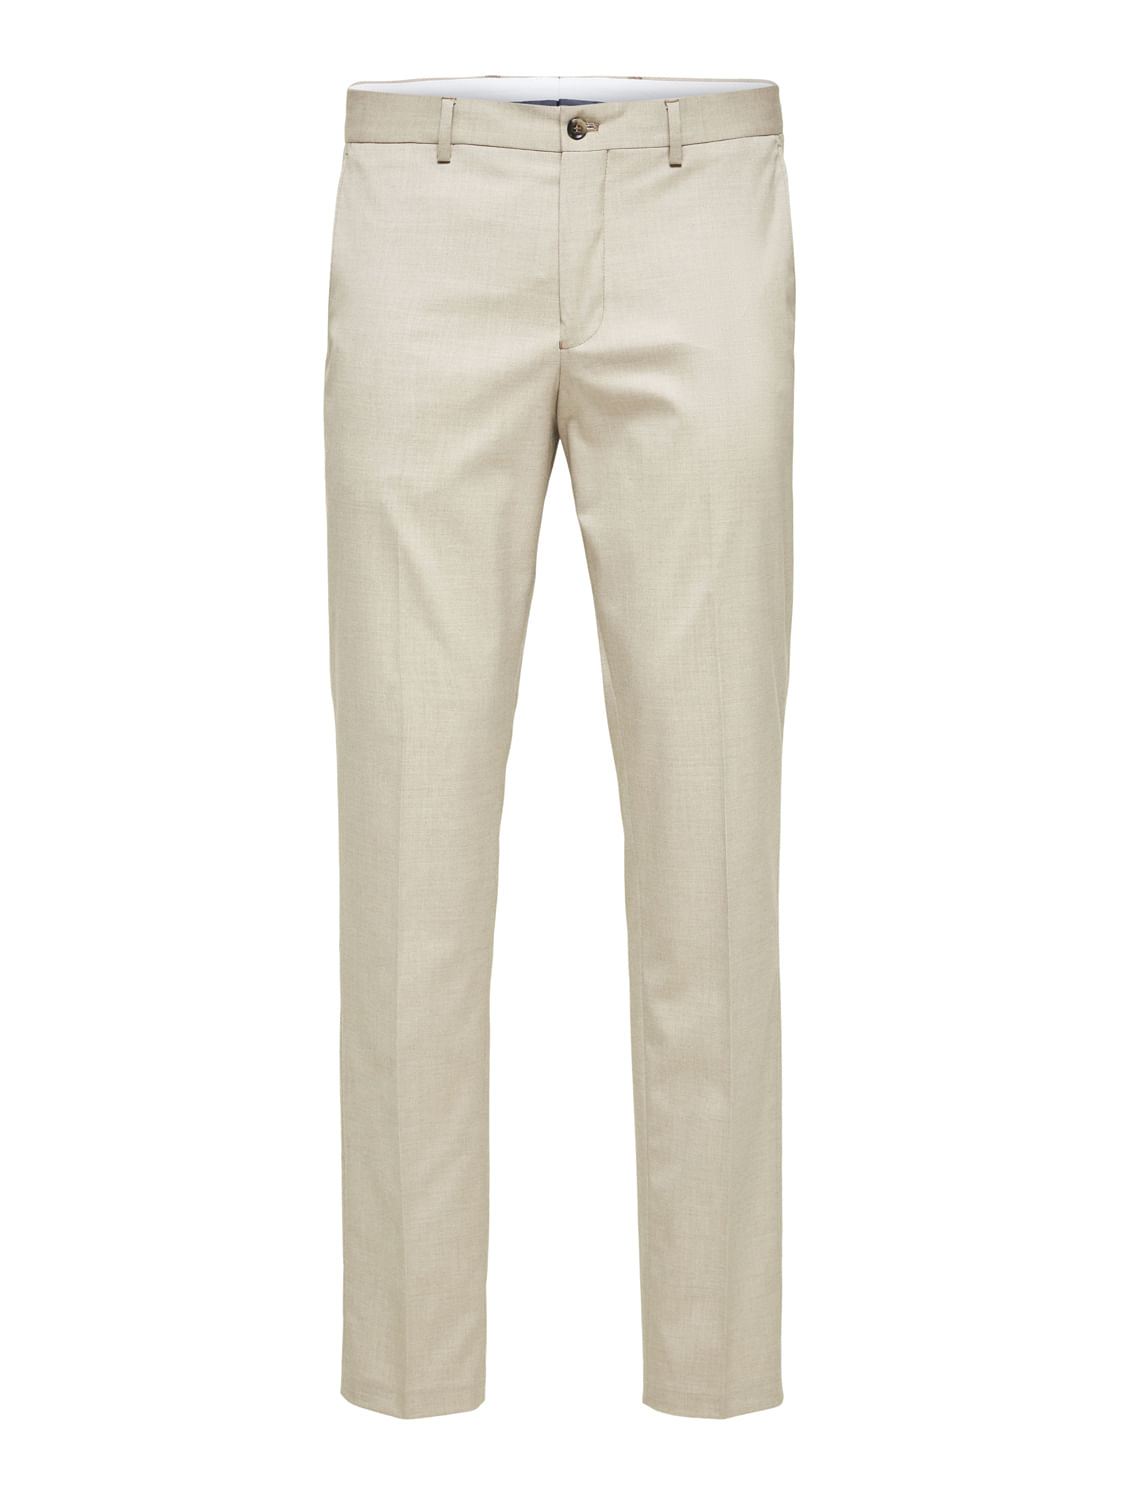 Buy Men Khaki Slim Fit Solid Casual Trousers Online - 786111 | Allen Solly